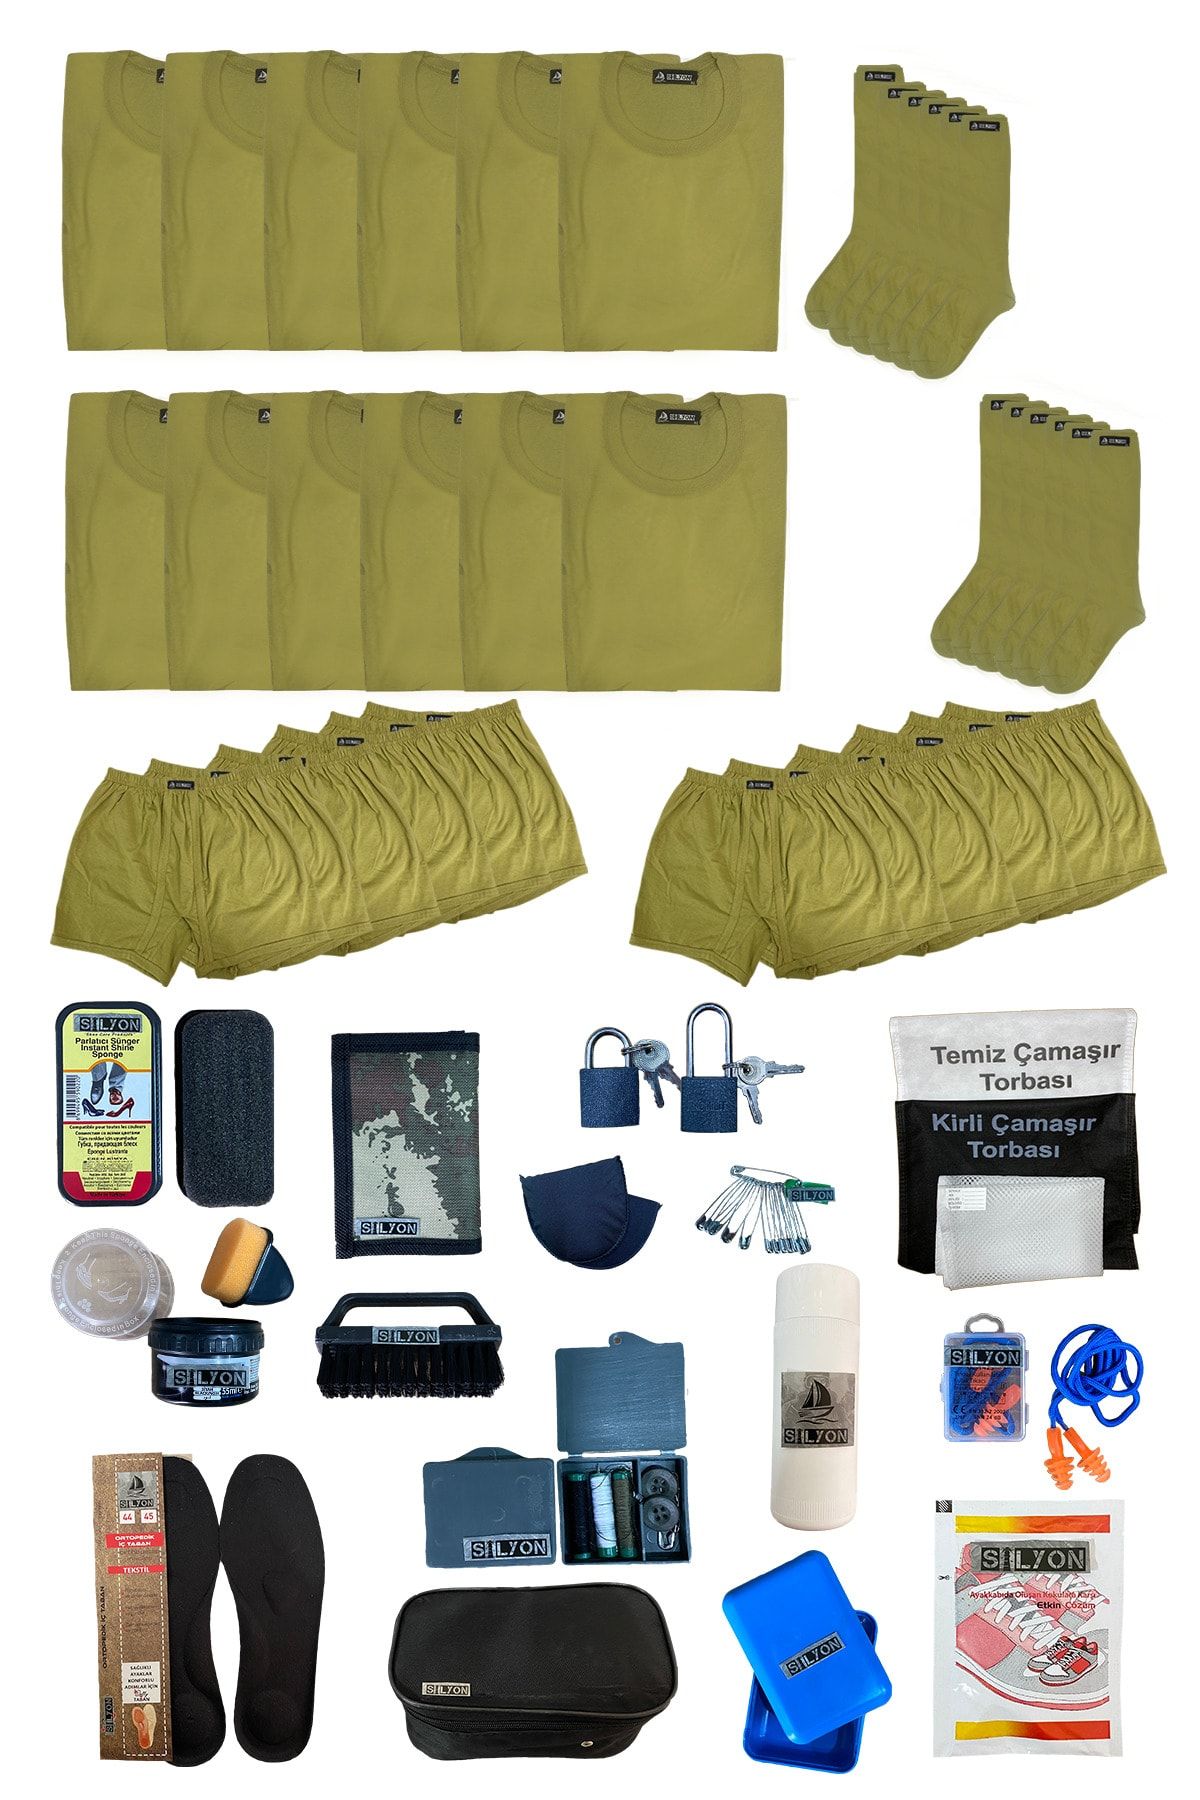 Silyon Askeri Giyim 12'lı Temel Askerlik Seti Acemi Asker - Bedelli Asker Ekonomik Malzeme Seti